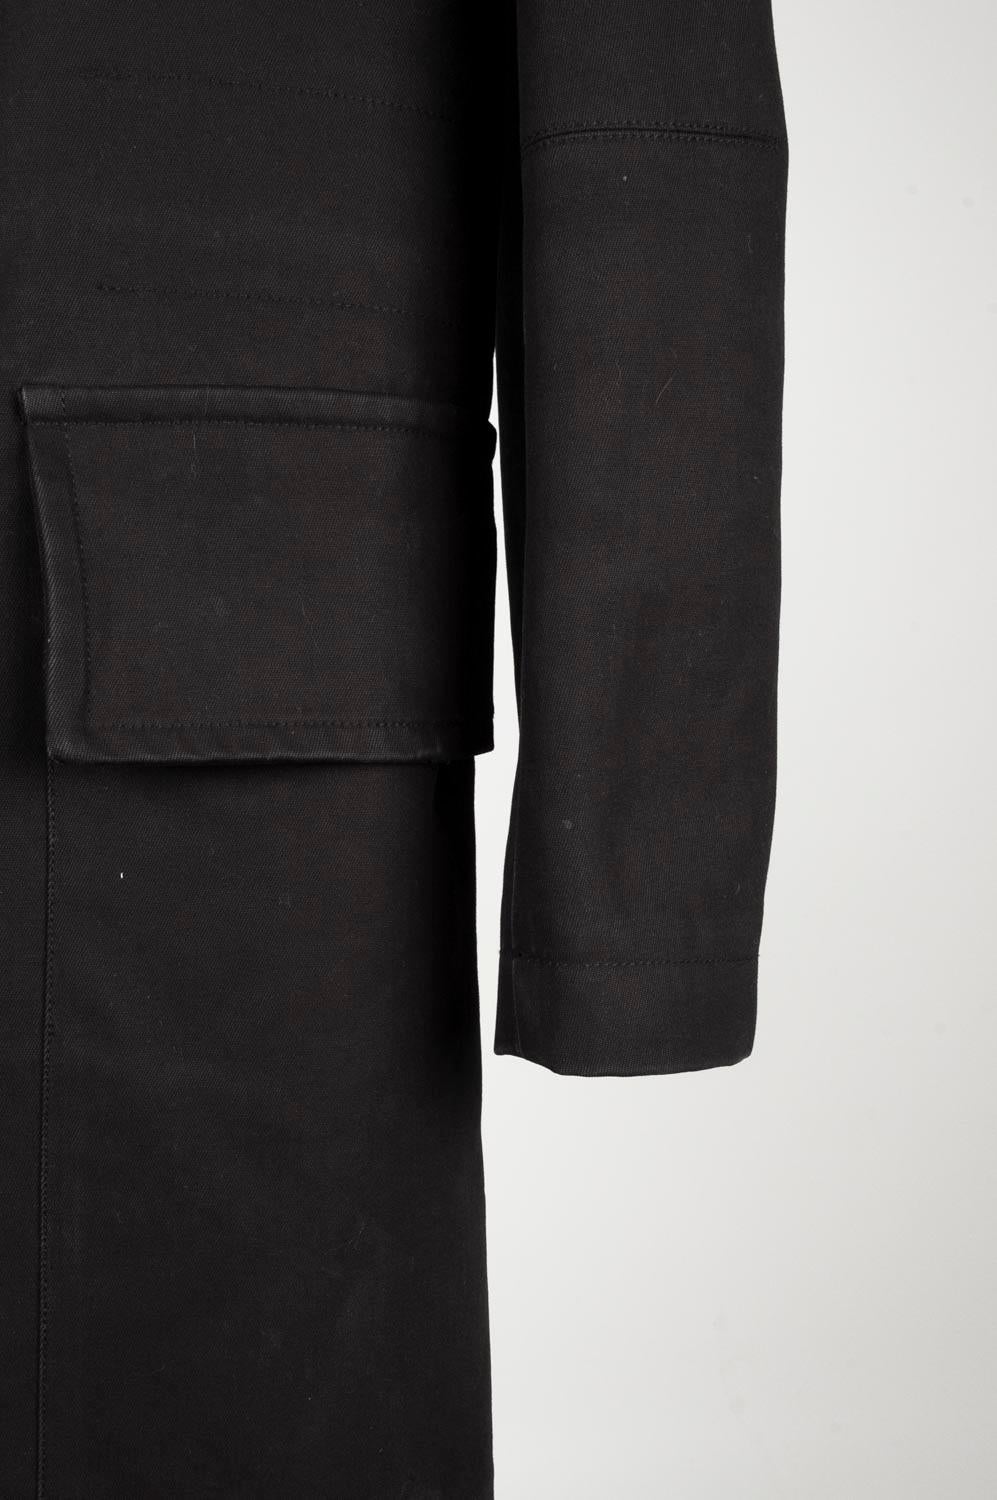 Men's Yves Saint Laurent Men Coat by Tom Ford Rive Gauche Size 50 (Large), S550 For Sale